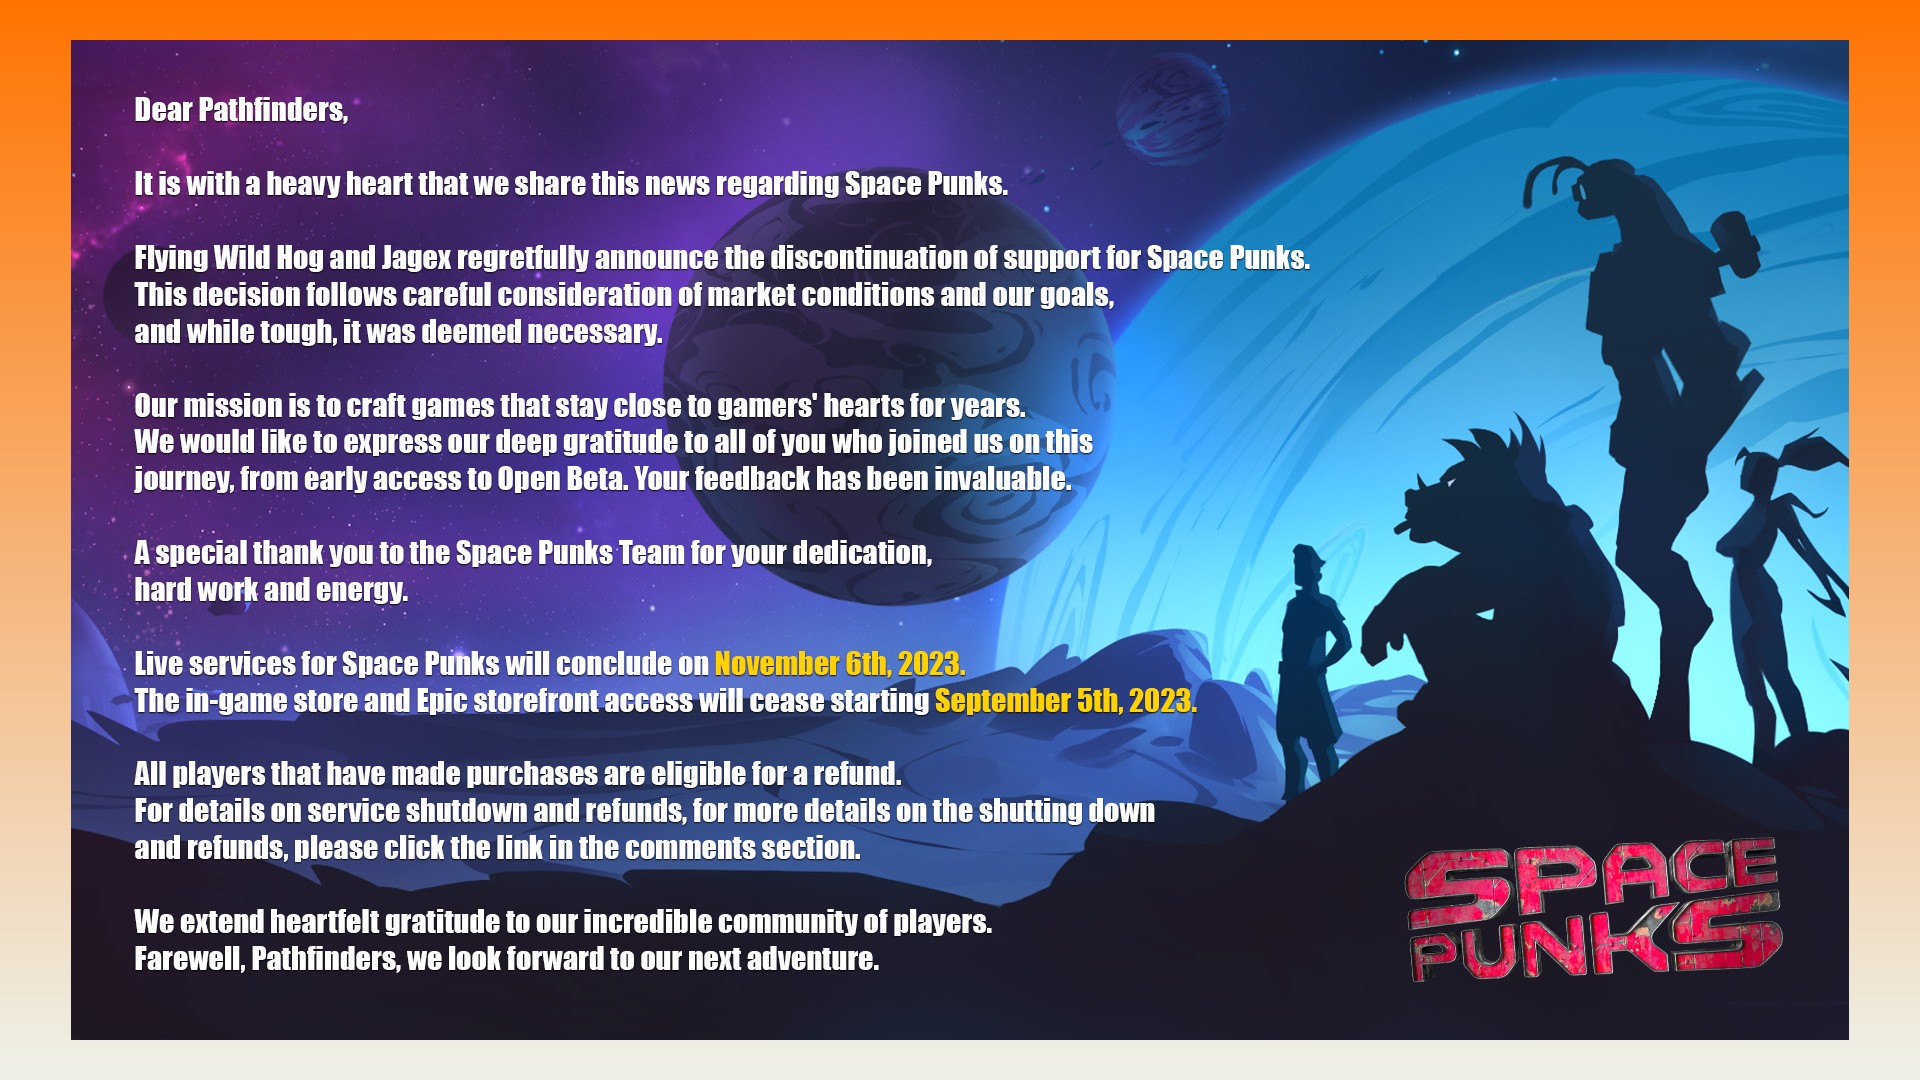 Space Punks shut down: A statement from Runescape developer Jagex confirming the closure of sci-fi ARPG game Space Punks